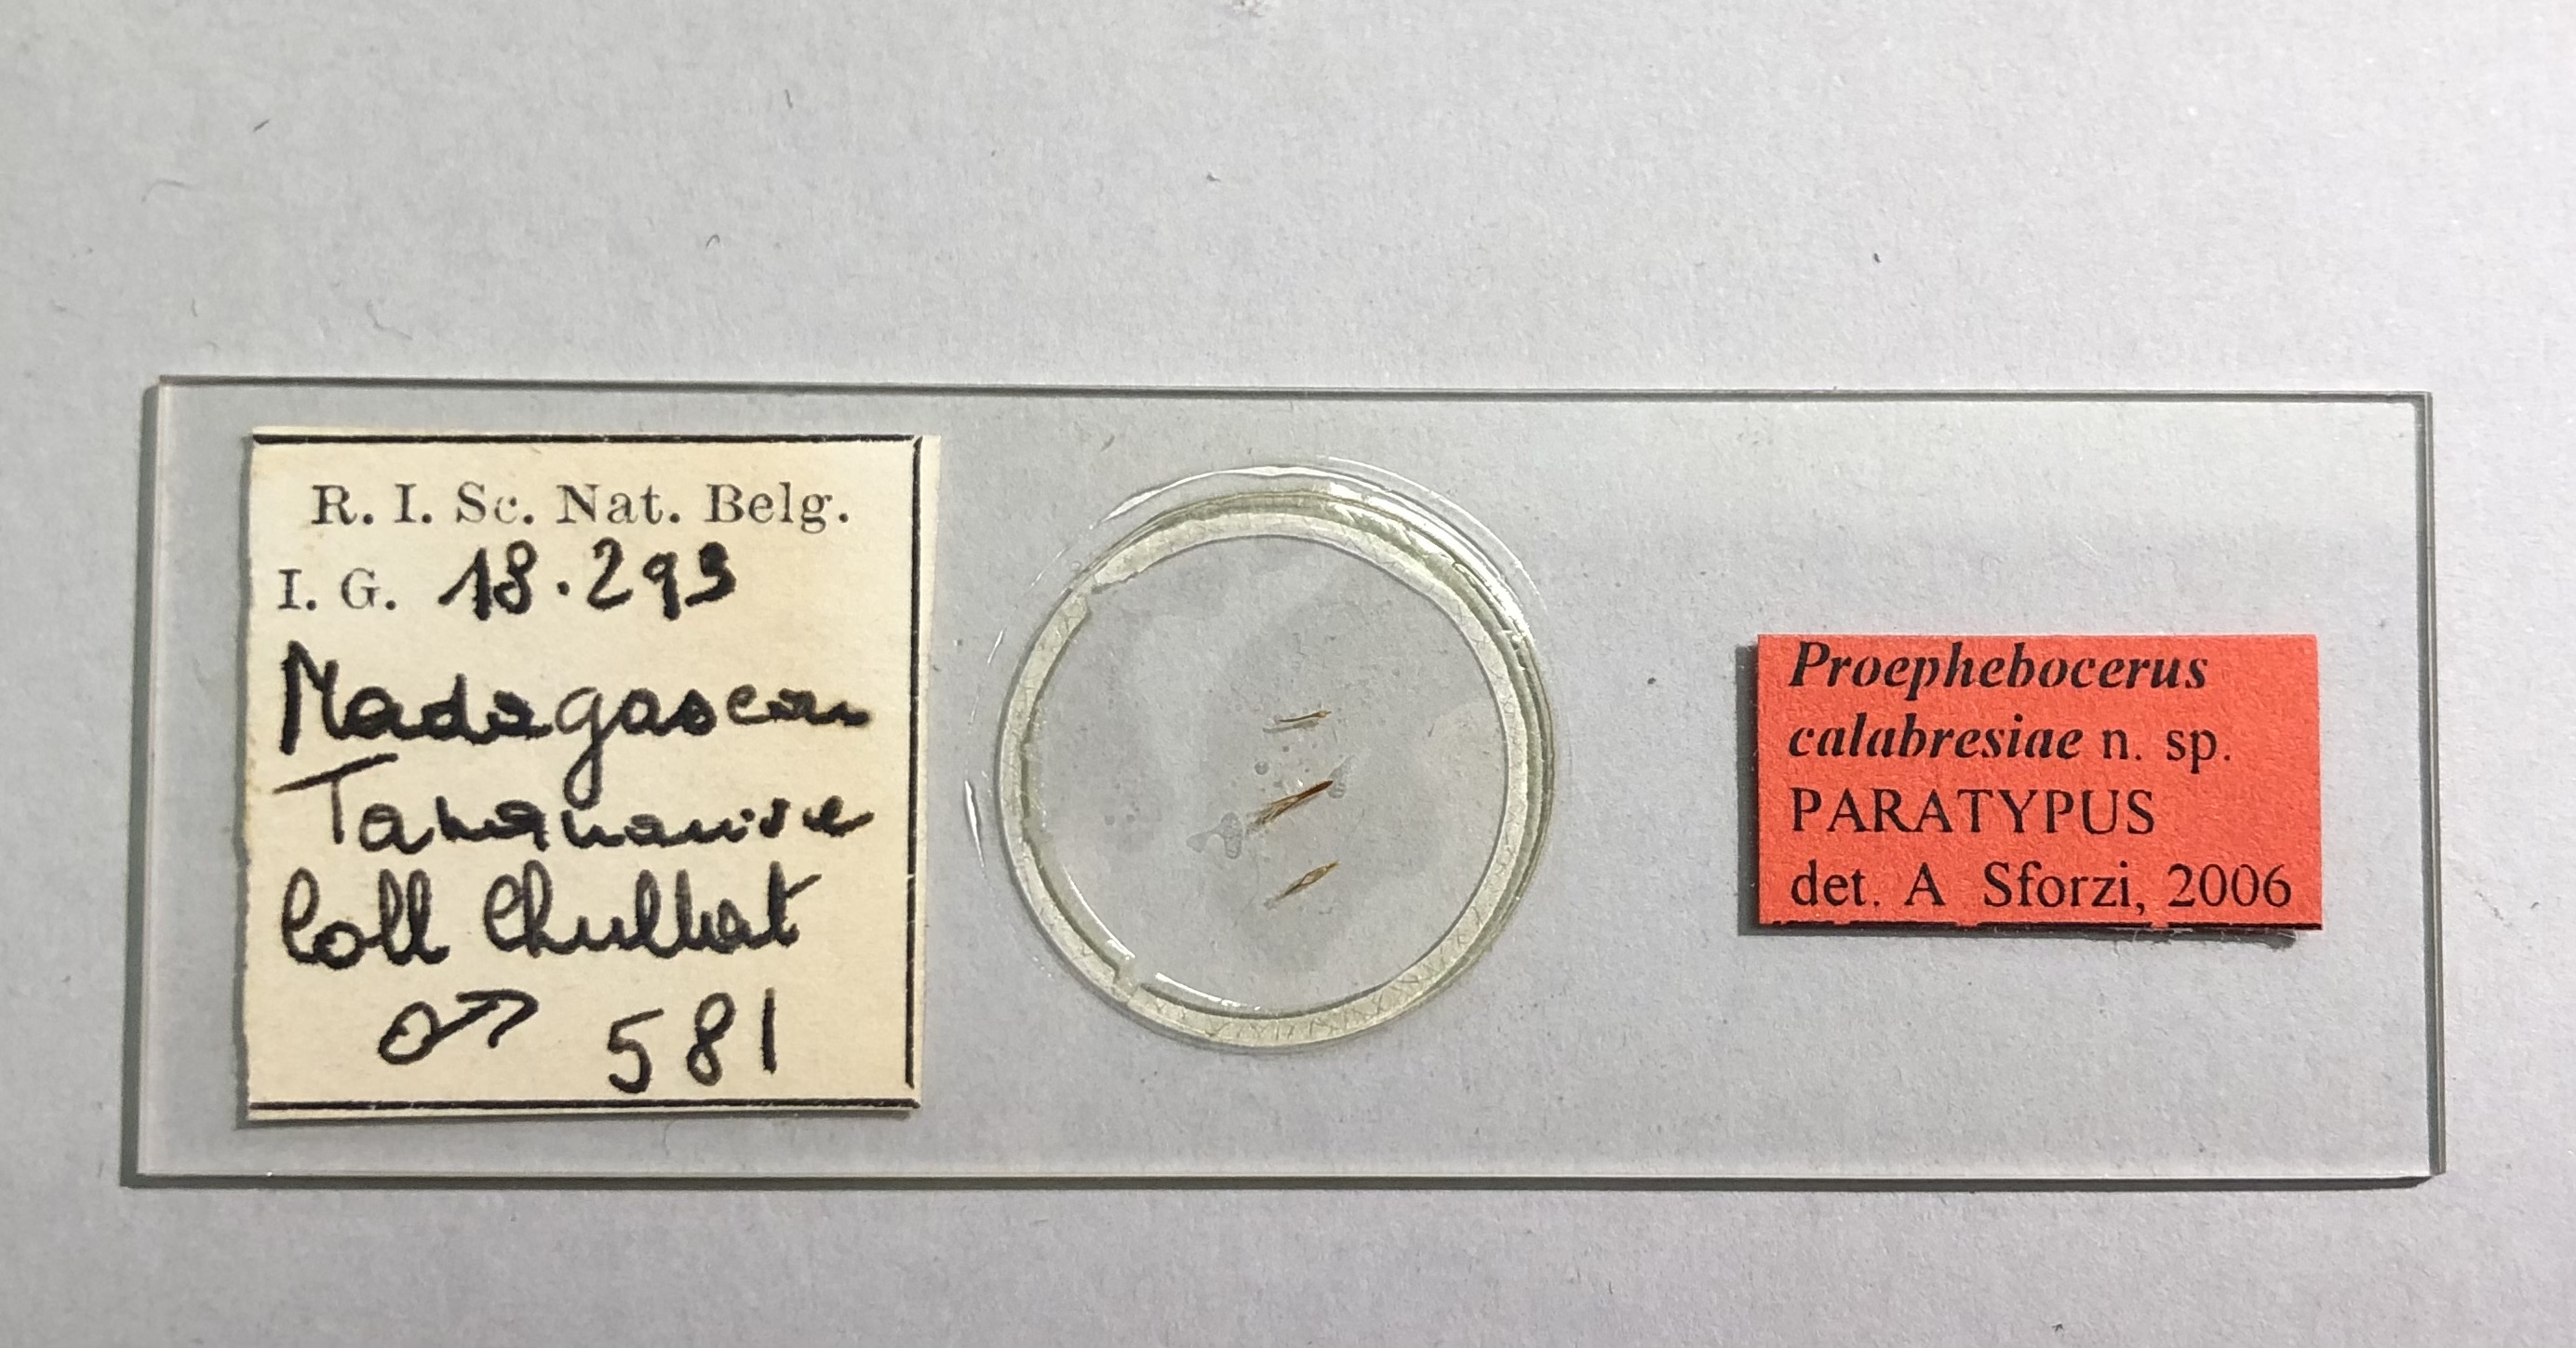 Proephebocerus calabresiae pt Microscopic preparation.jpg